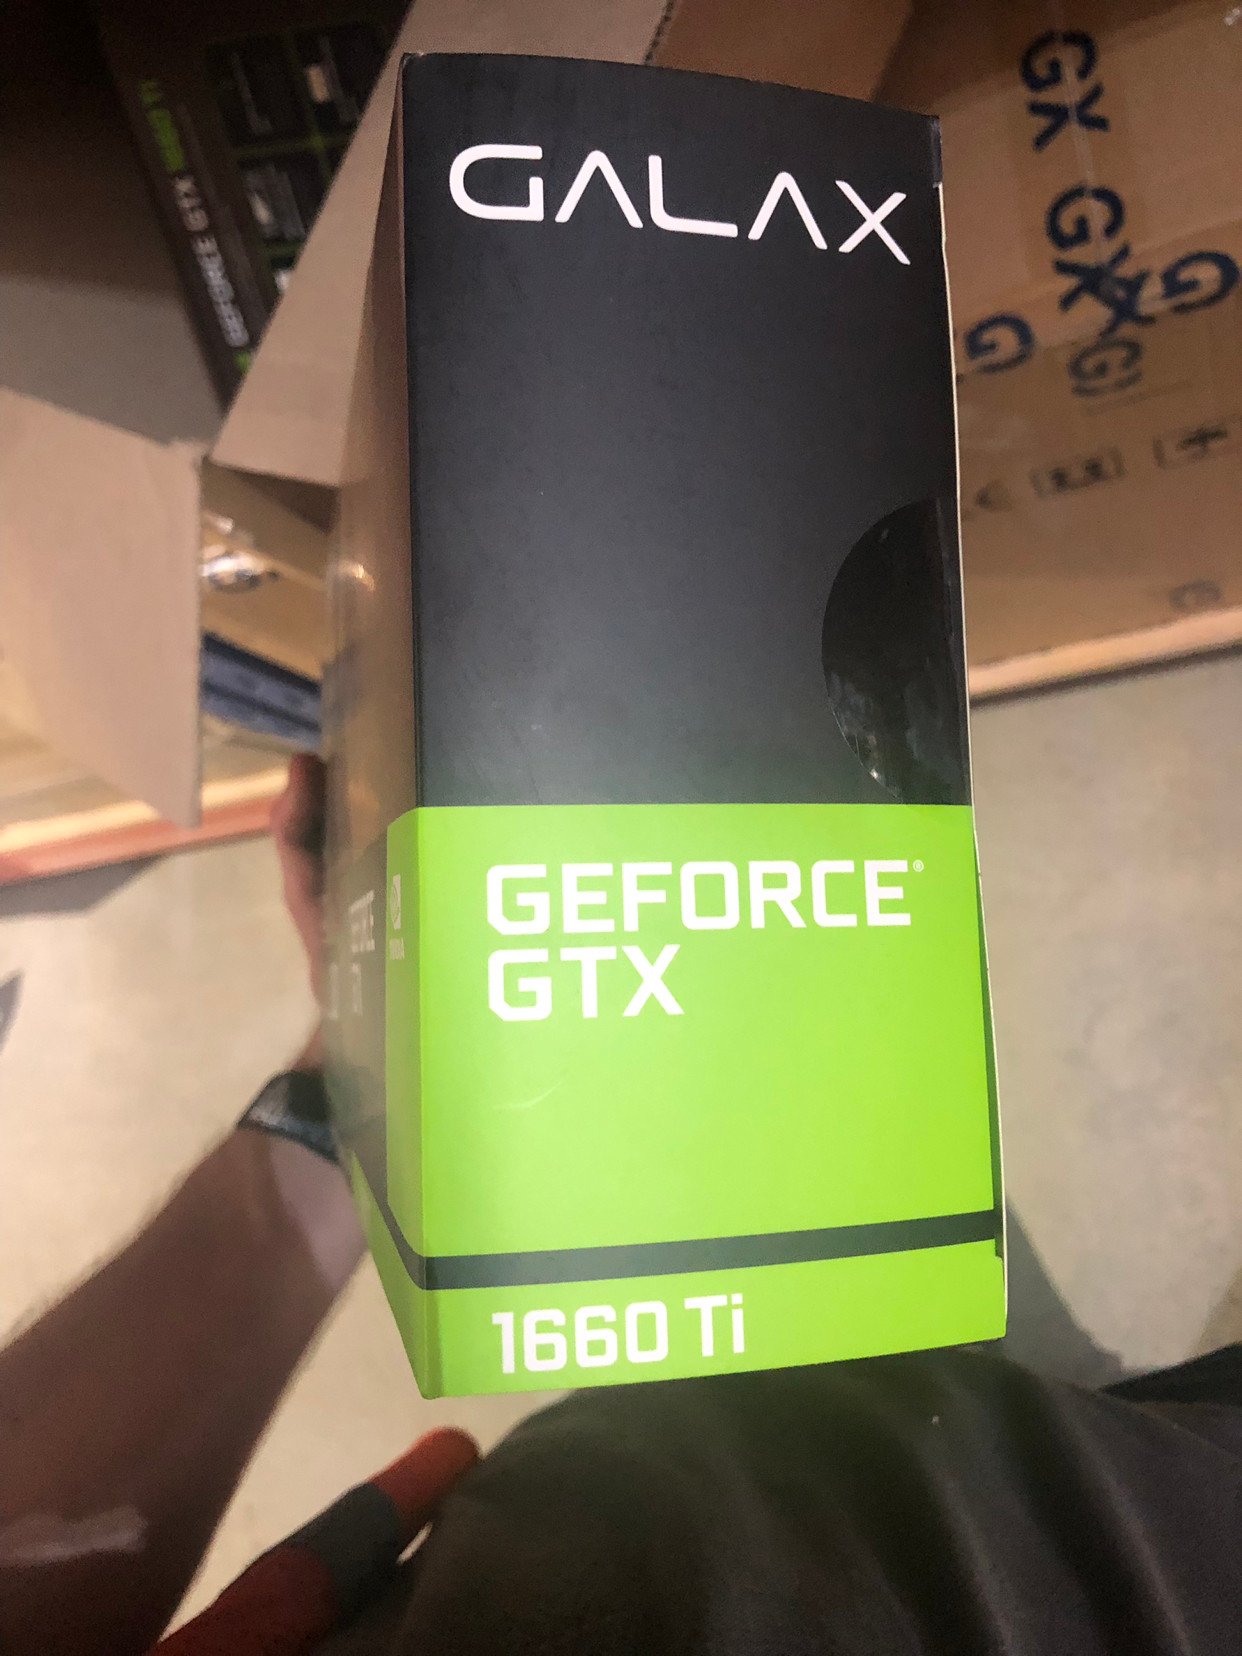 Galax GTX 1660 Ti